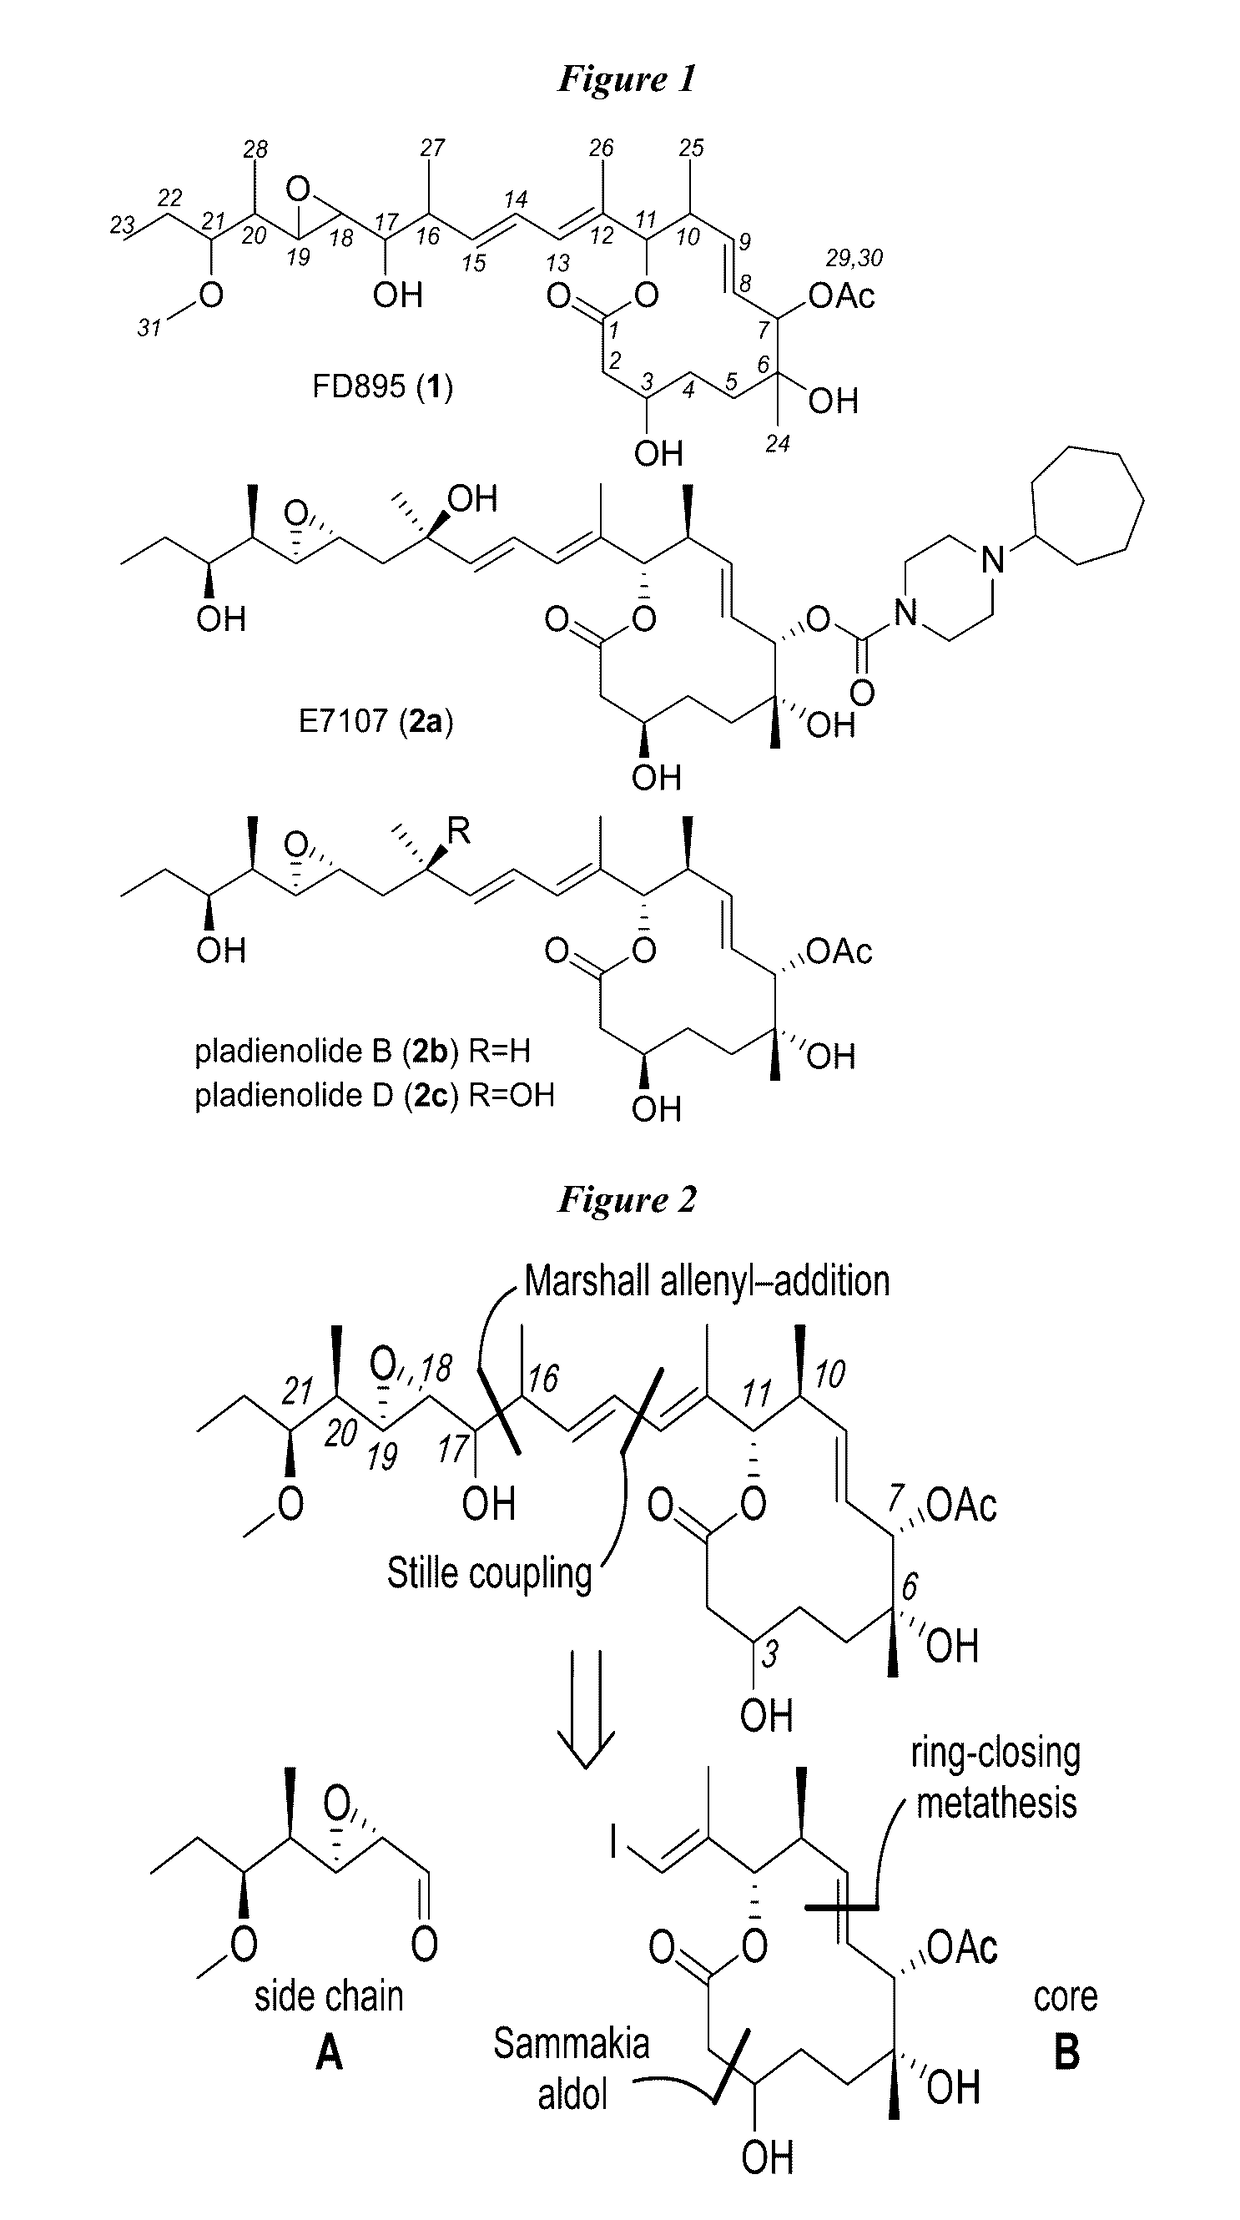 Anti-cancer polyketide compounds